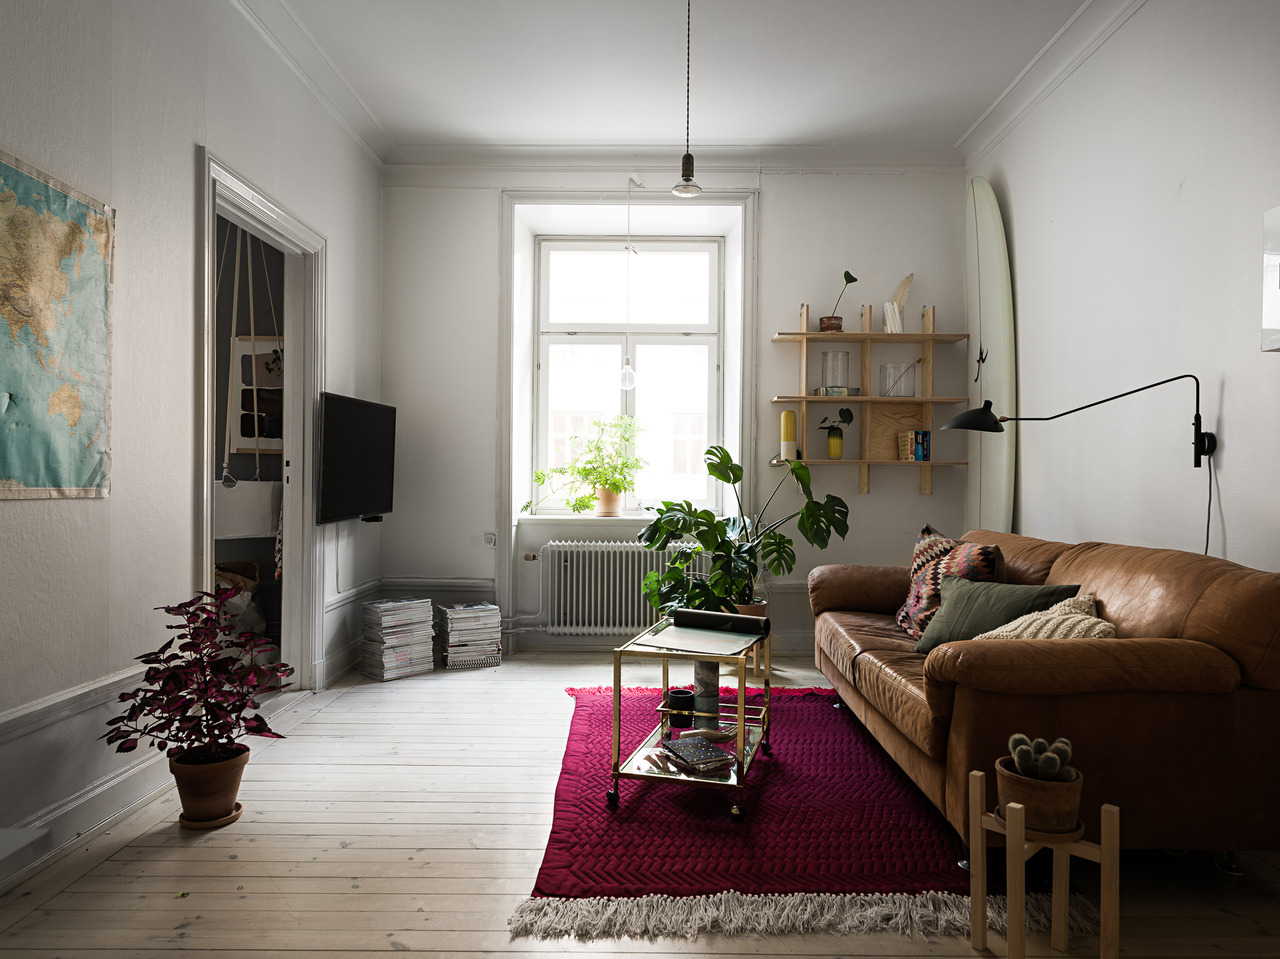 Seven Interior Design Tips To Increase Your Home's Value L'Essenziale